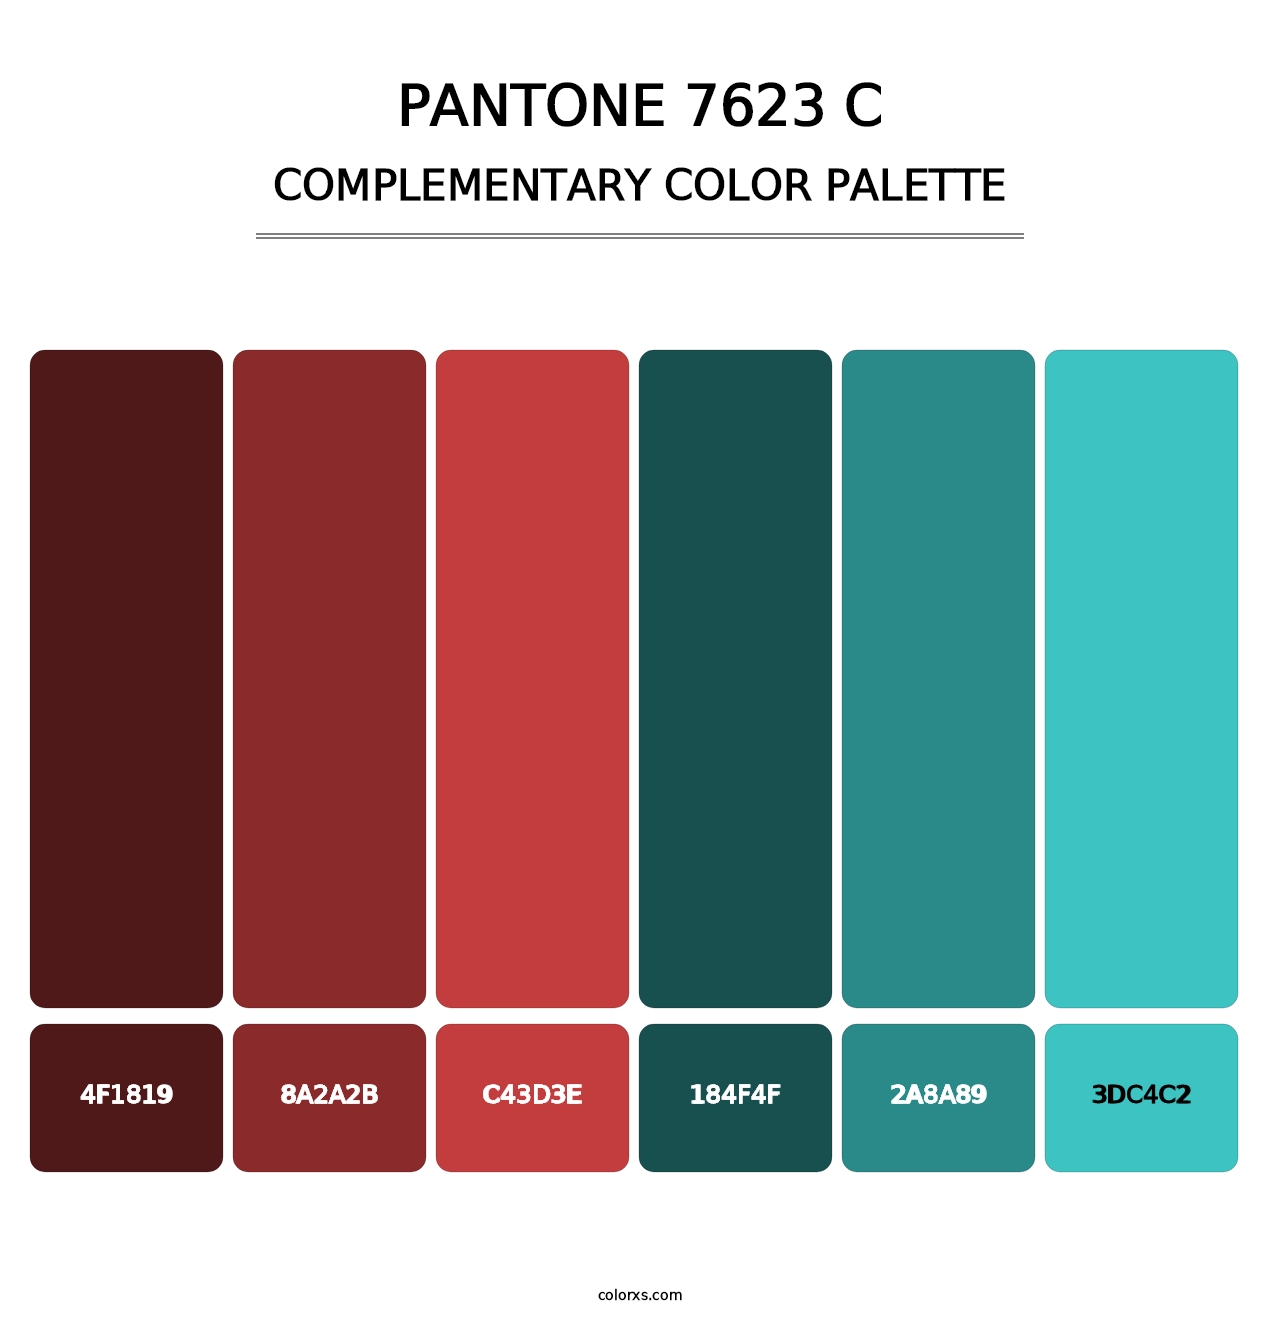 PANTONE 7623 C - Complementary Color Palette